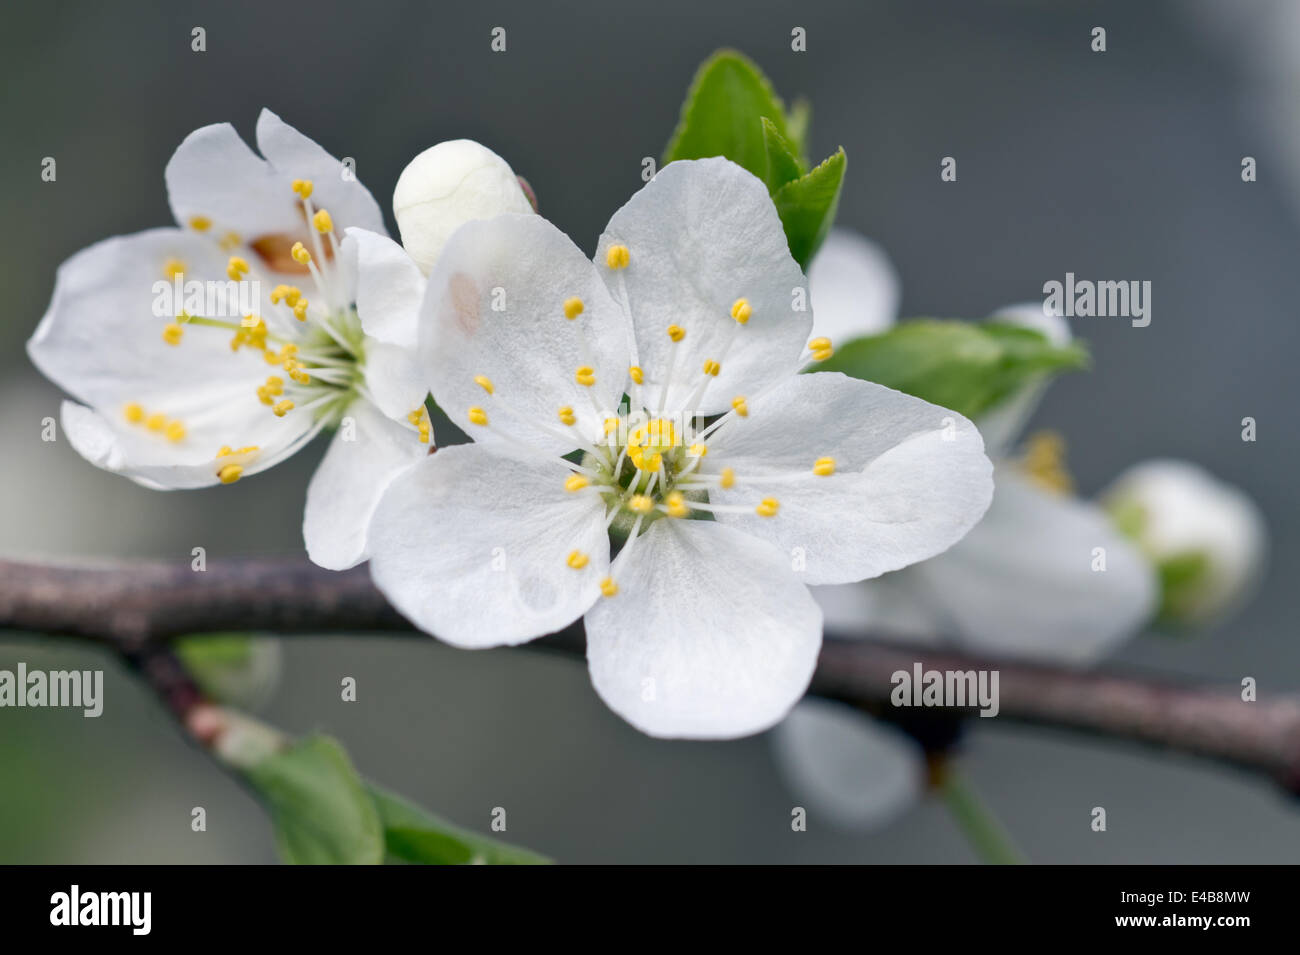 Cherry blossom close-up Stock Photo